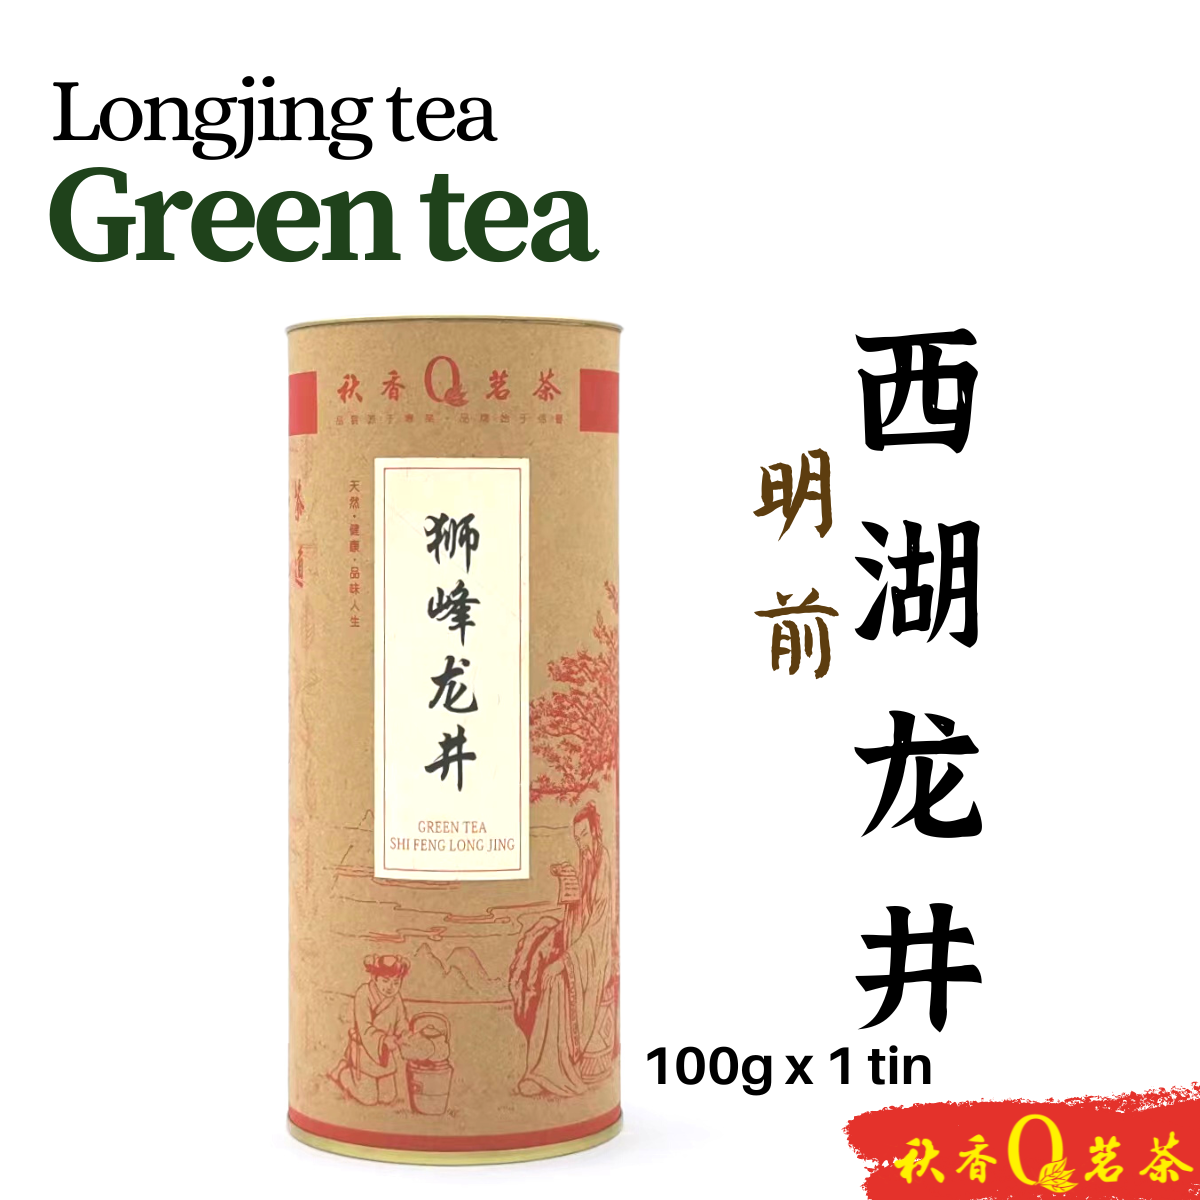 明前狮峰龙井 Shi Feng Longjing tea (Early Spring)【100g】|【绿茶 Green tea】